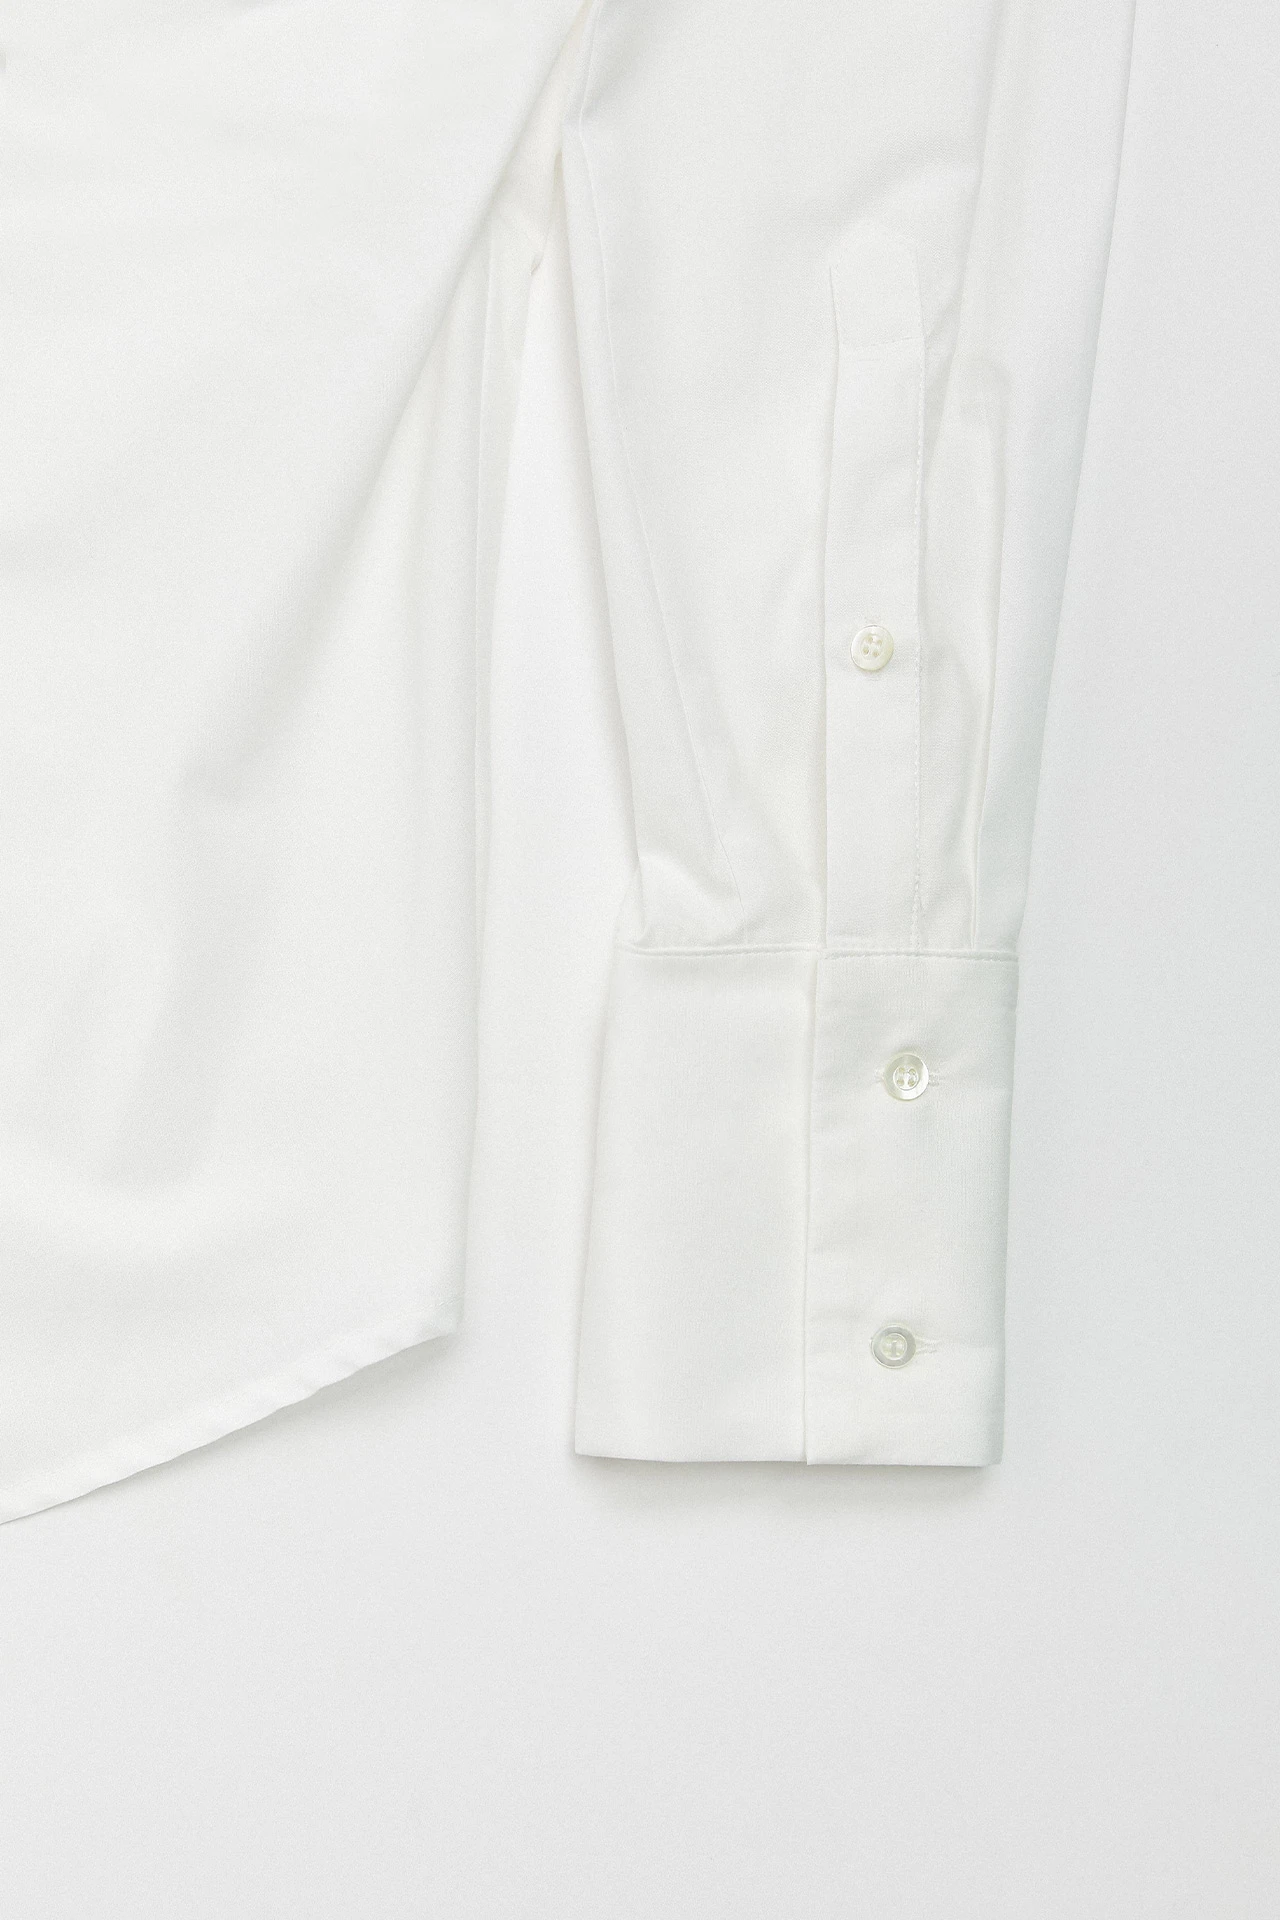 Miista-iryna-off-white-shirt-04